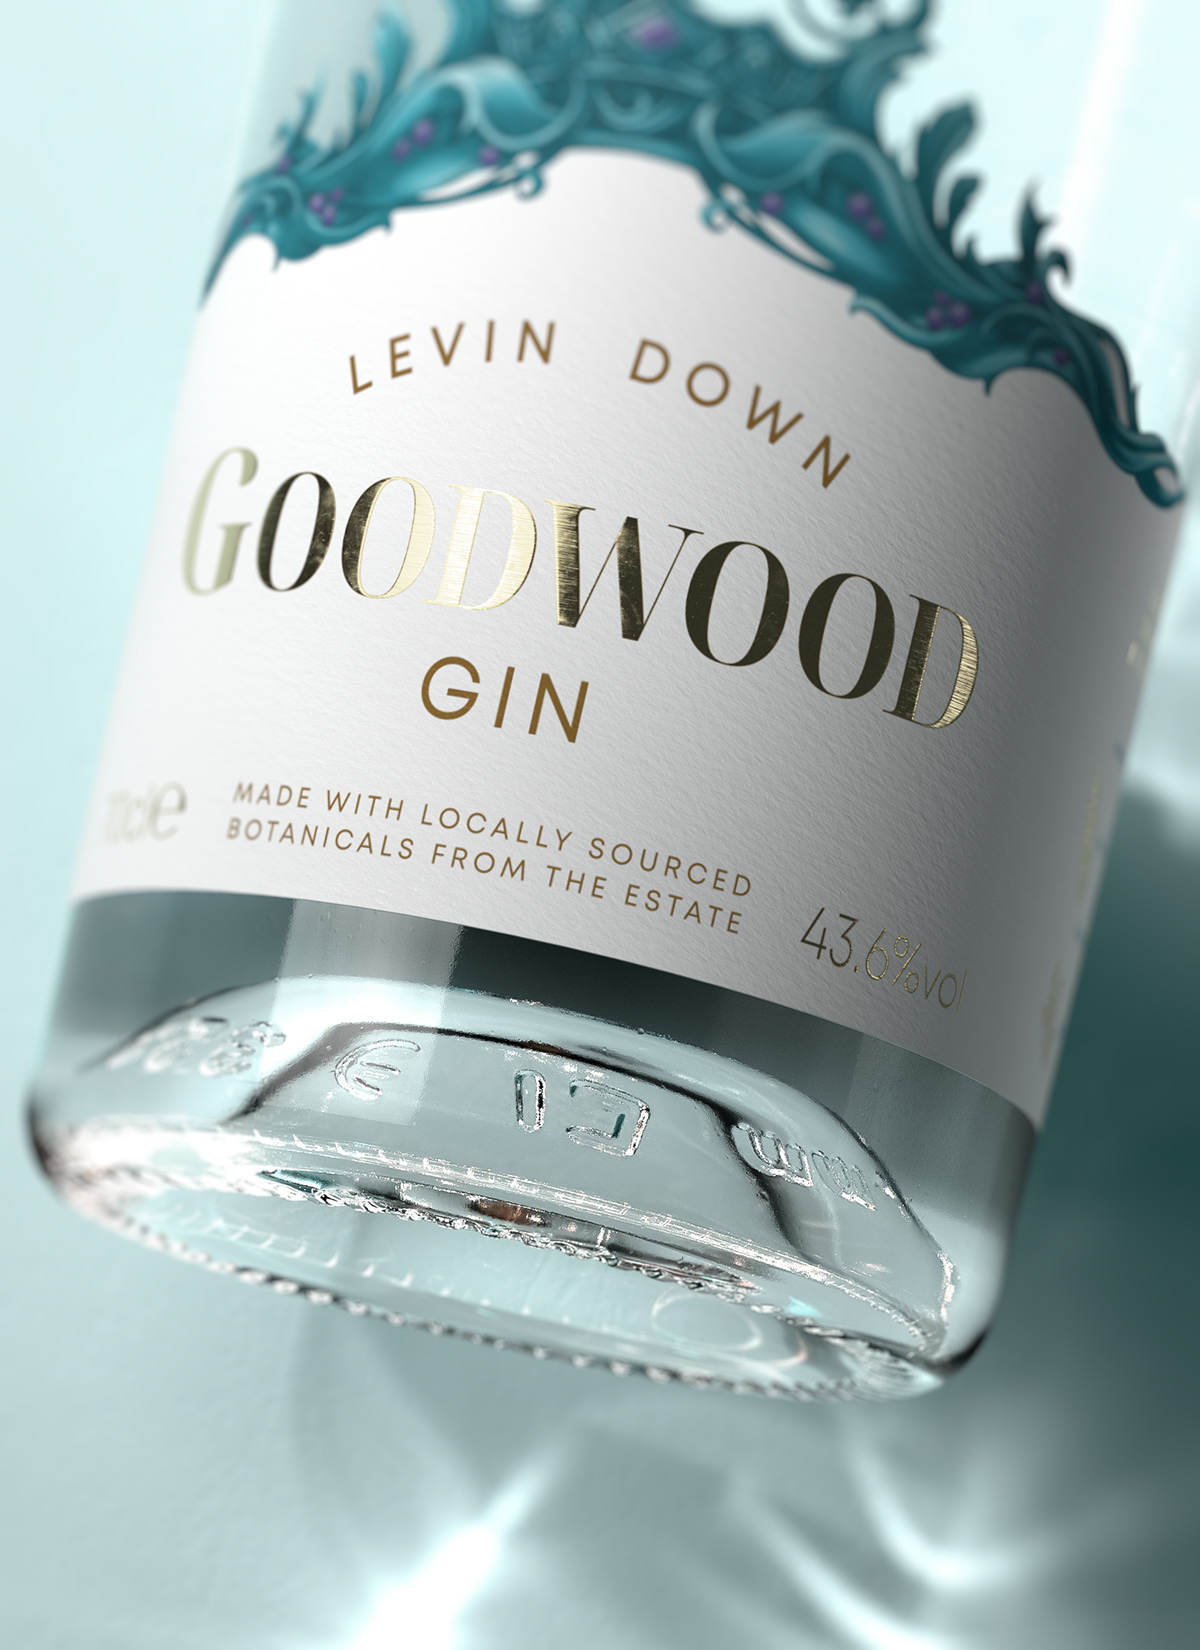 goodwood bottle gin CGI Spirits drink caustics Render